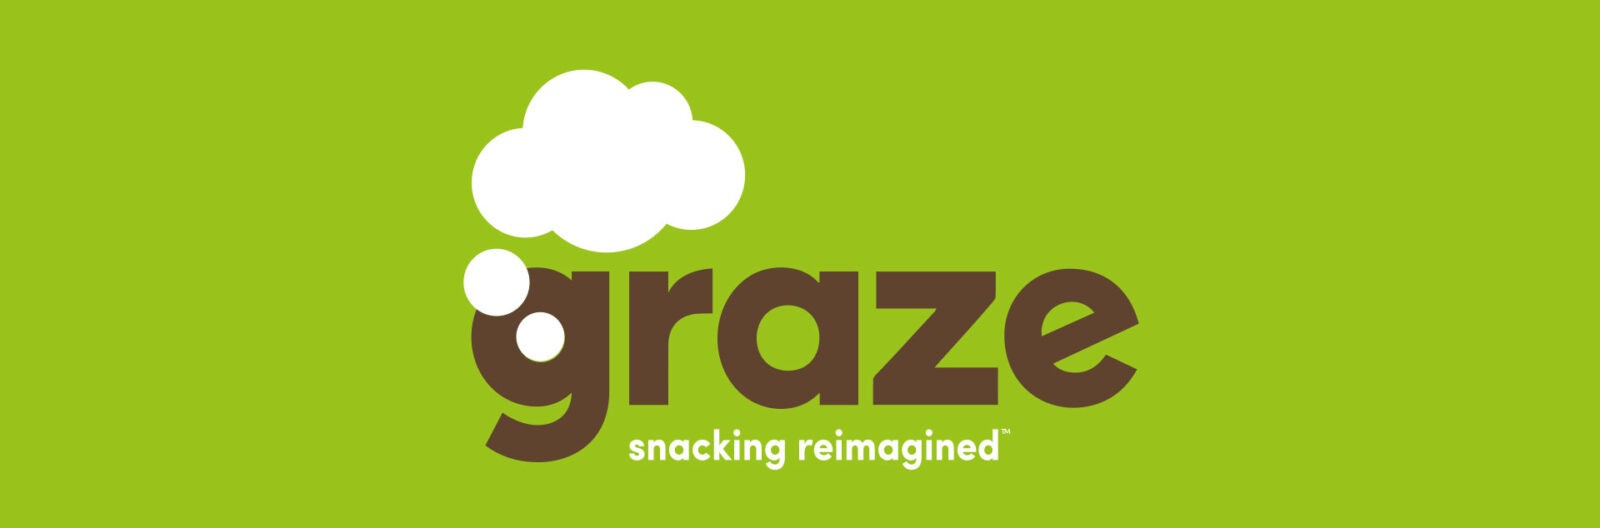 graze_press_logo_1_banner